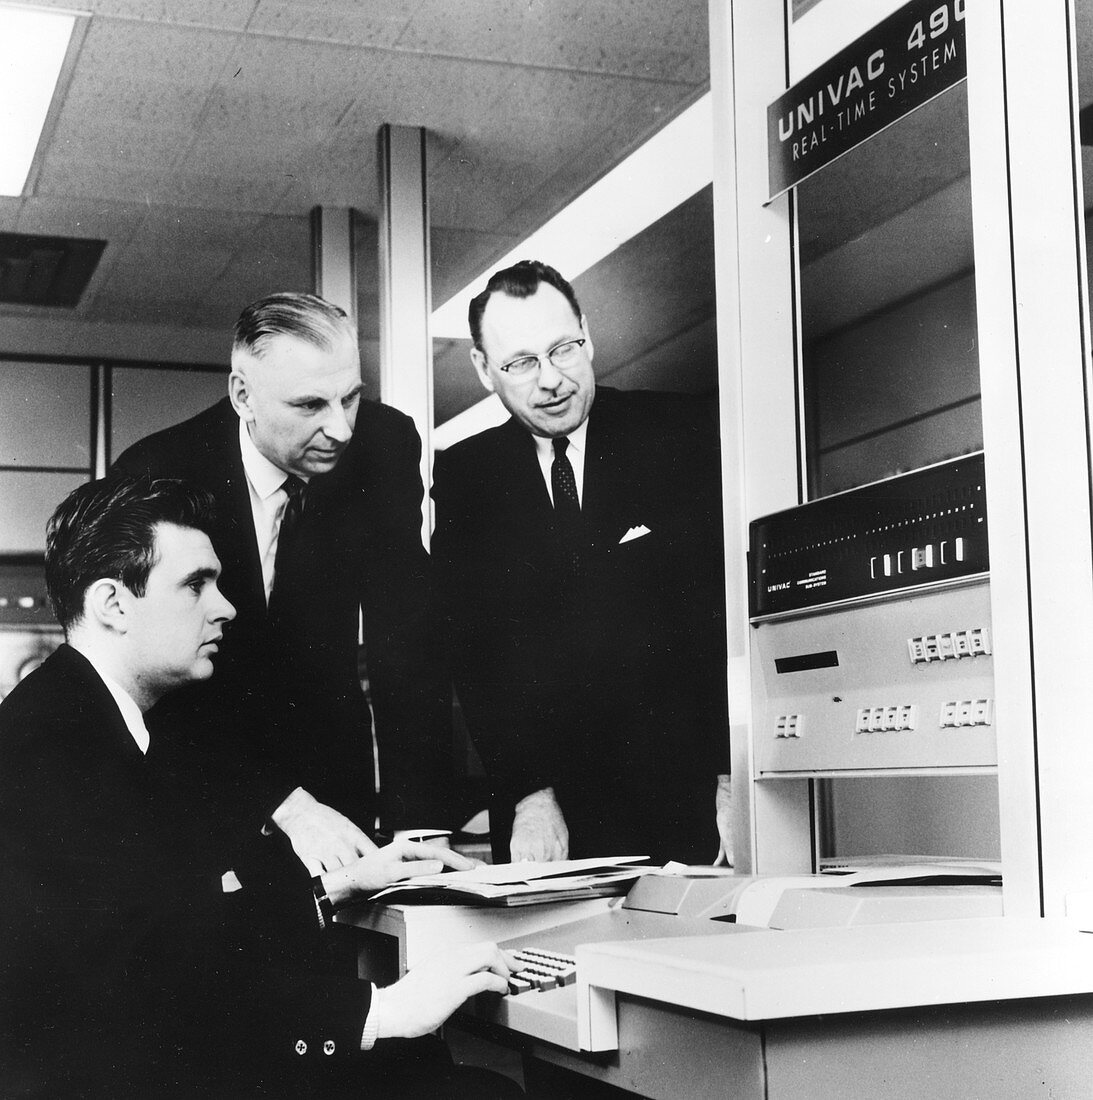 UNIVAC 490 computer operators, 1960s